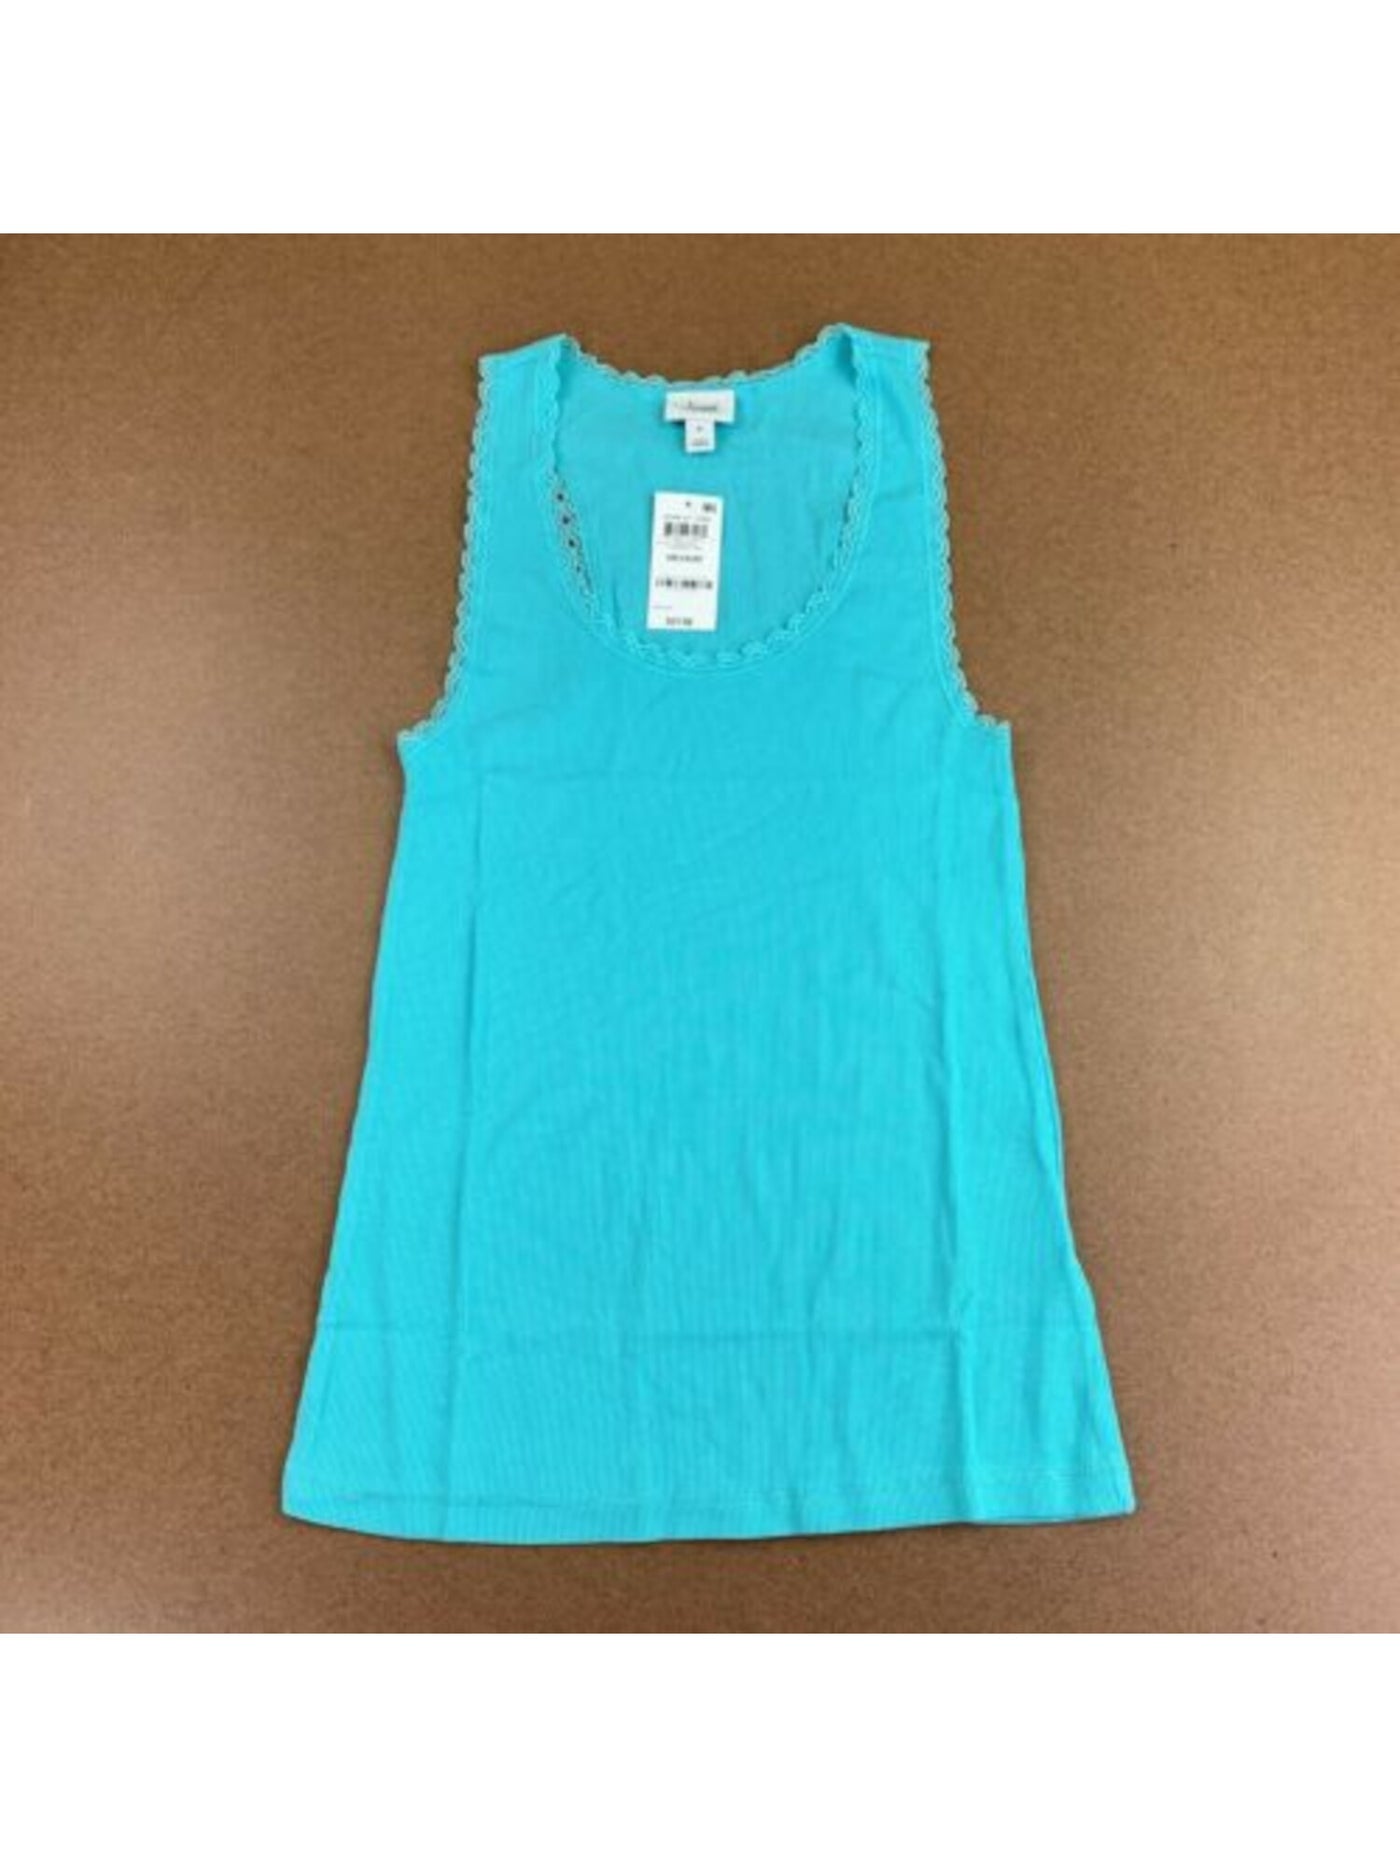 JENNI Intimates Turquoise Tank Top Sleepwear Shirt Size: M